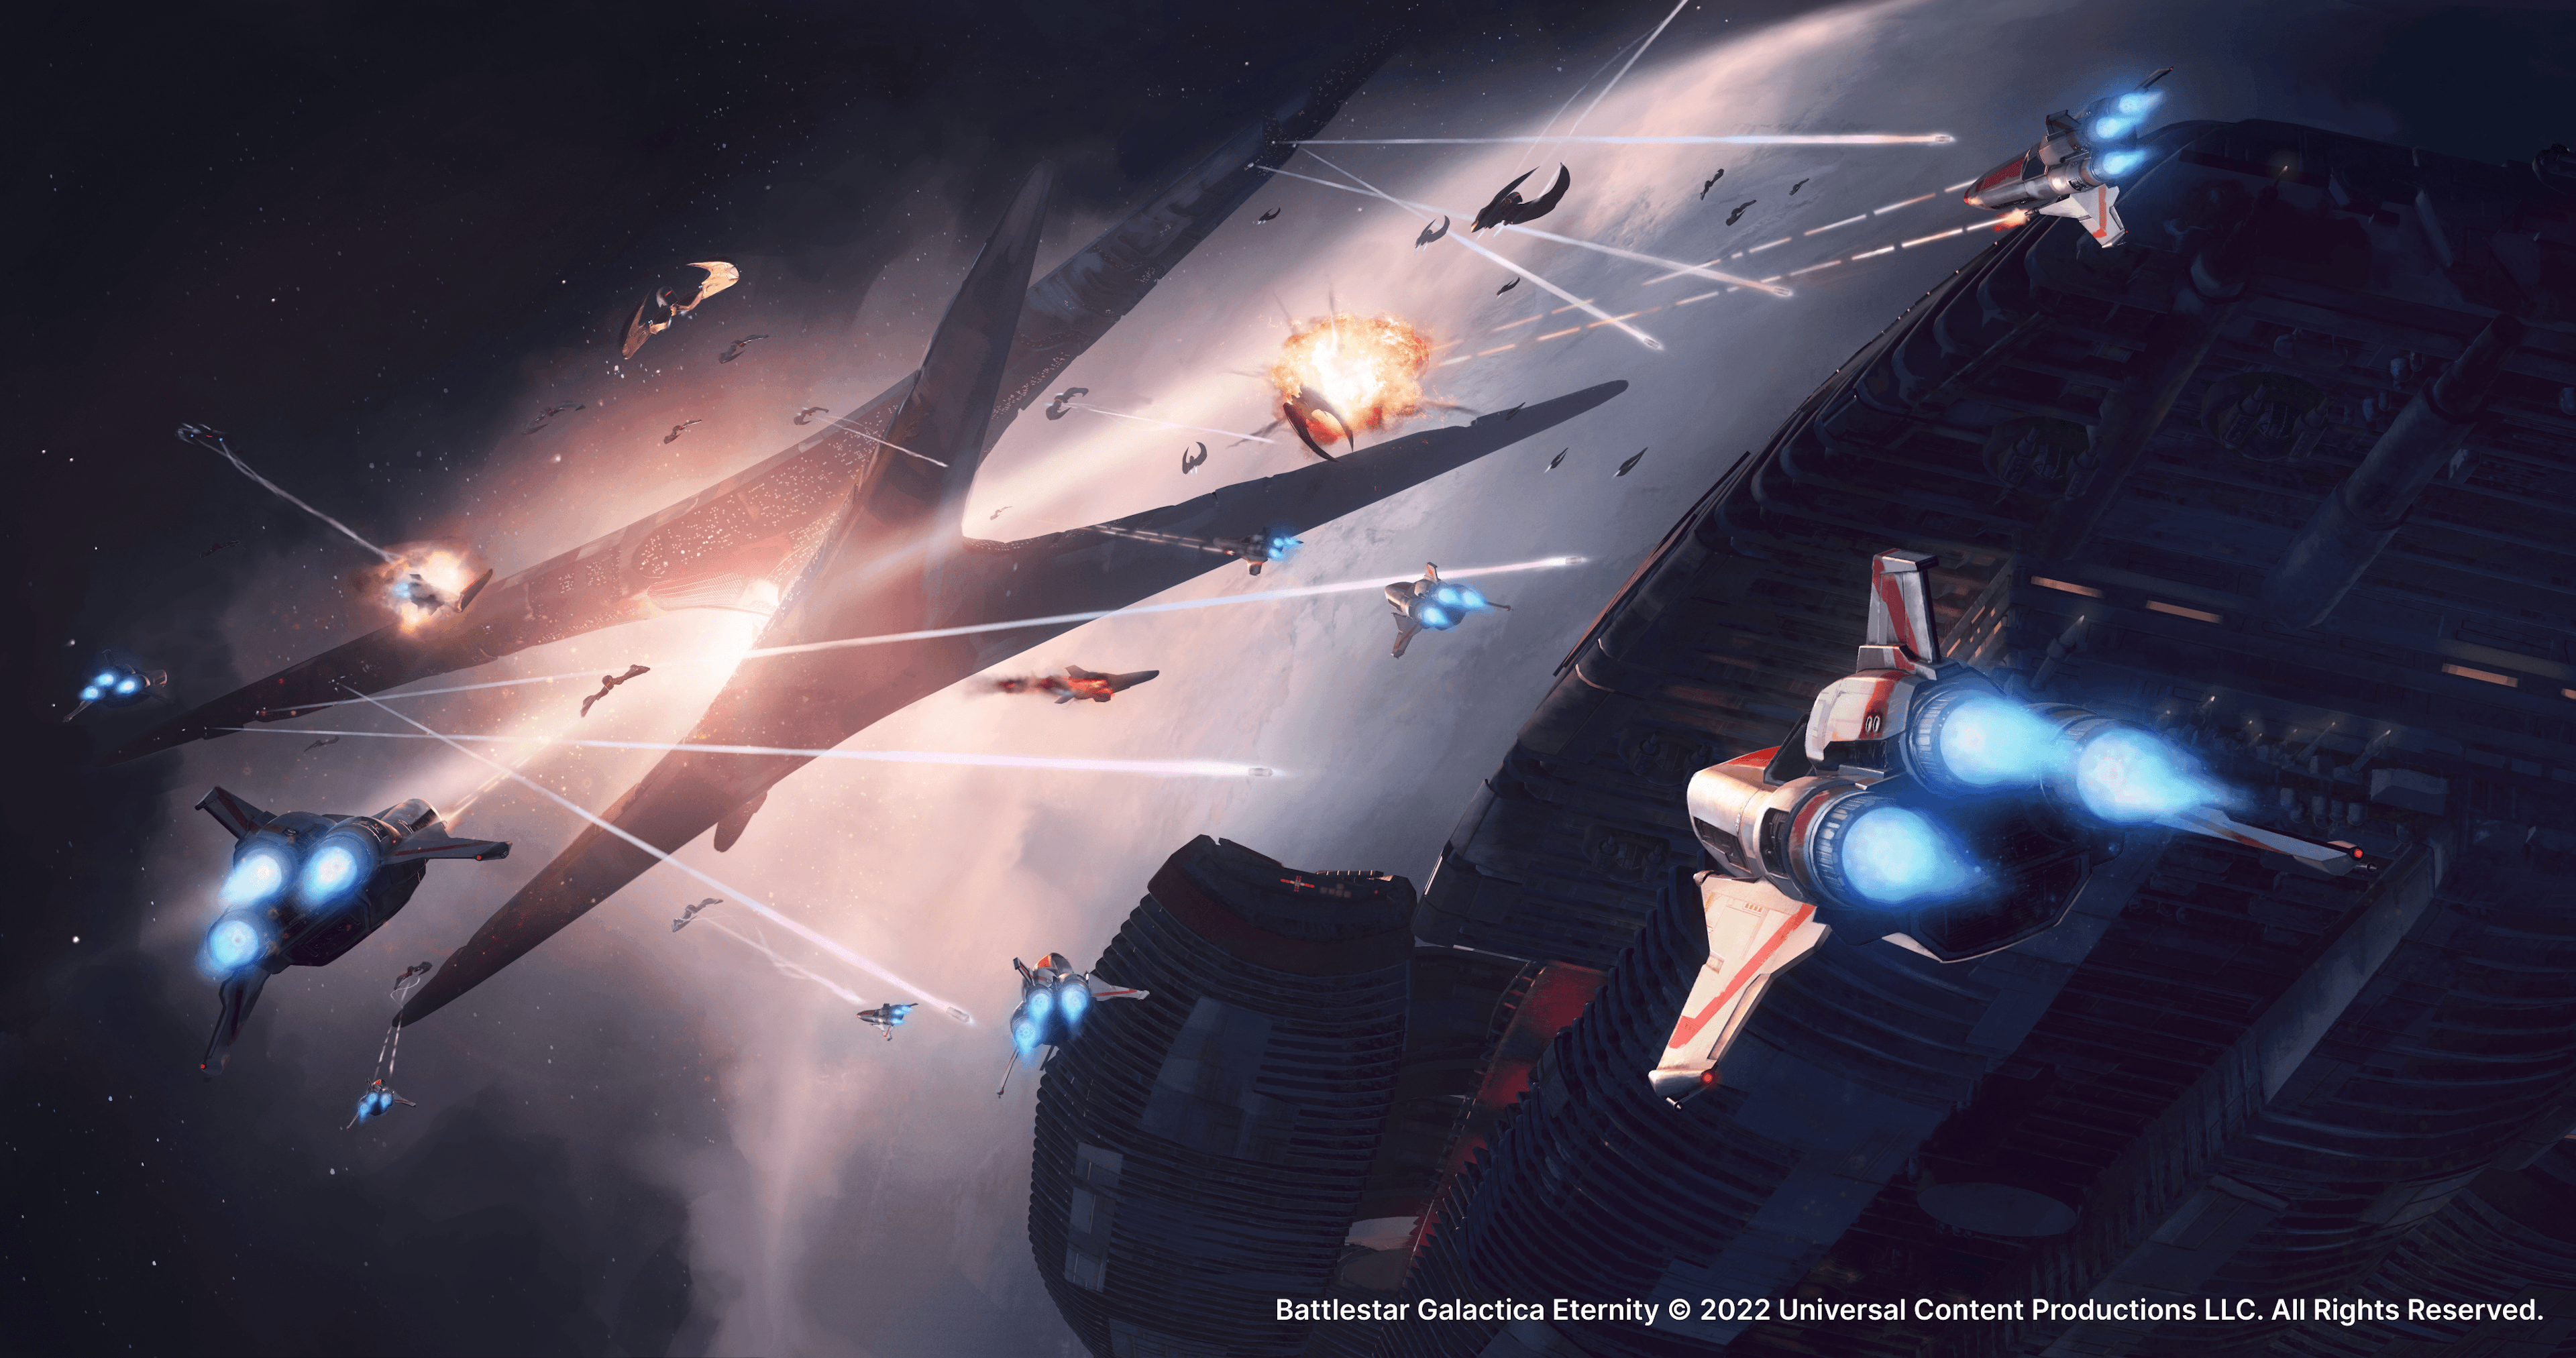 Battlestar Galactica Eternity game image 1.png